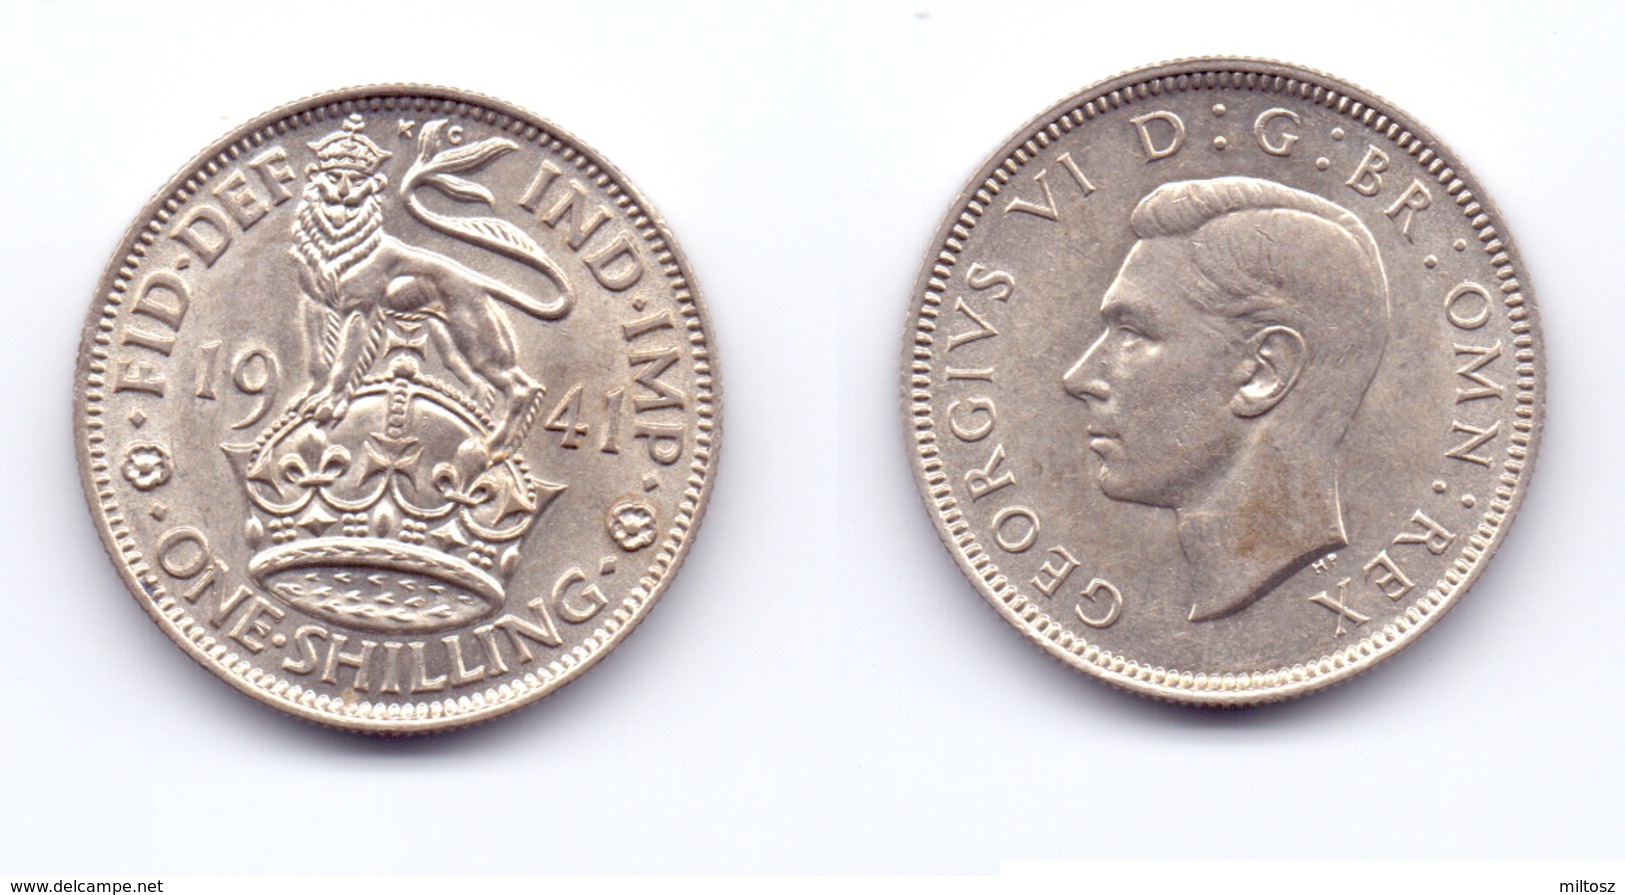 Great Britain 1 Shilling 1941 - I. 1 Shilling